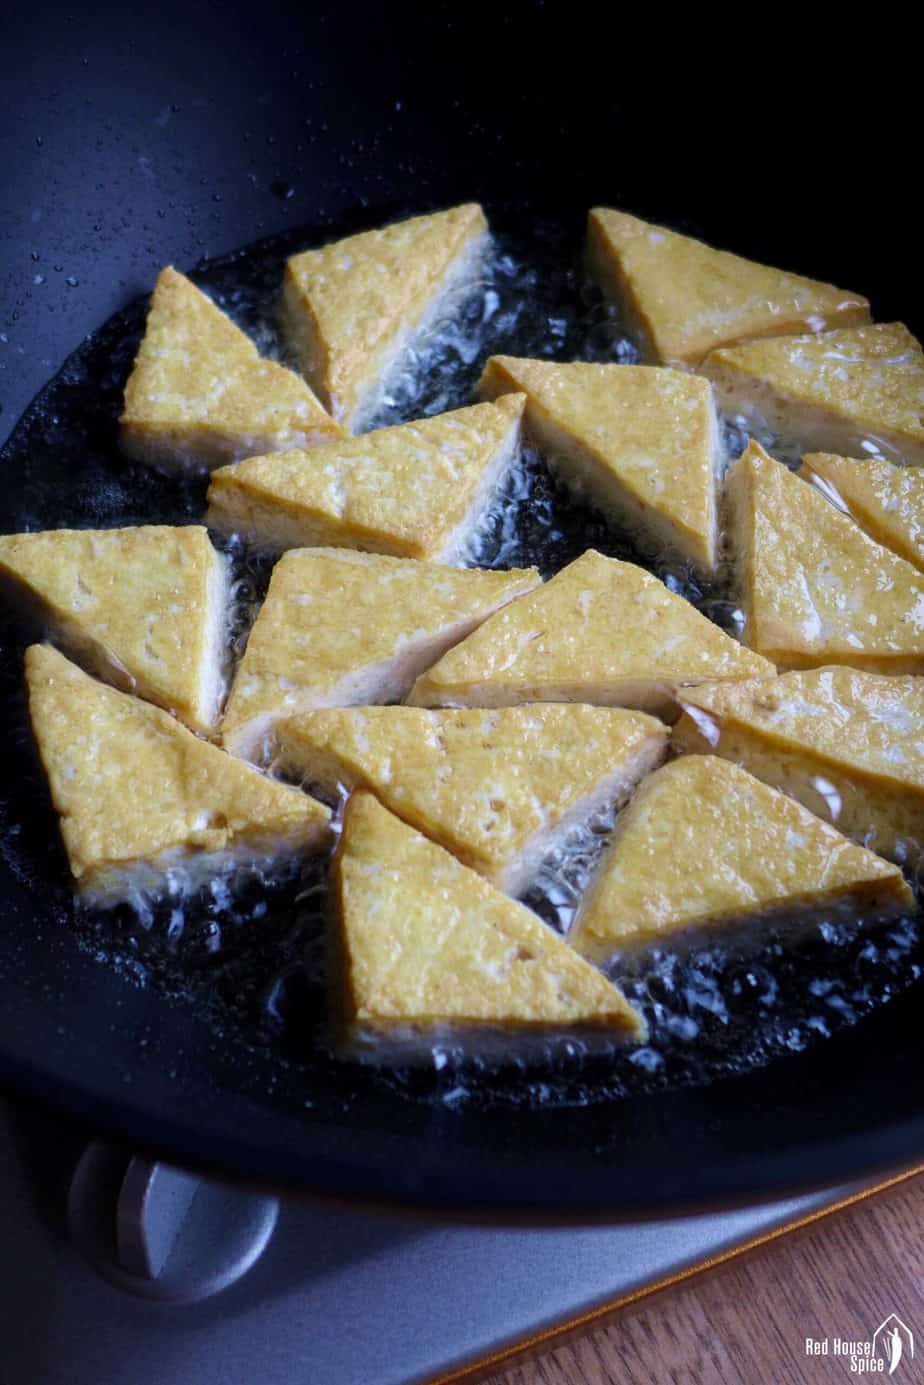 shallow-frying tofu